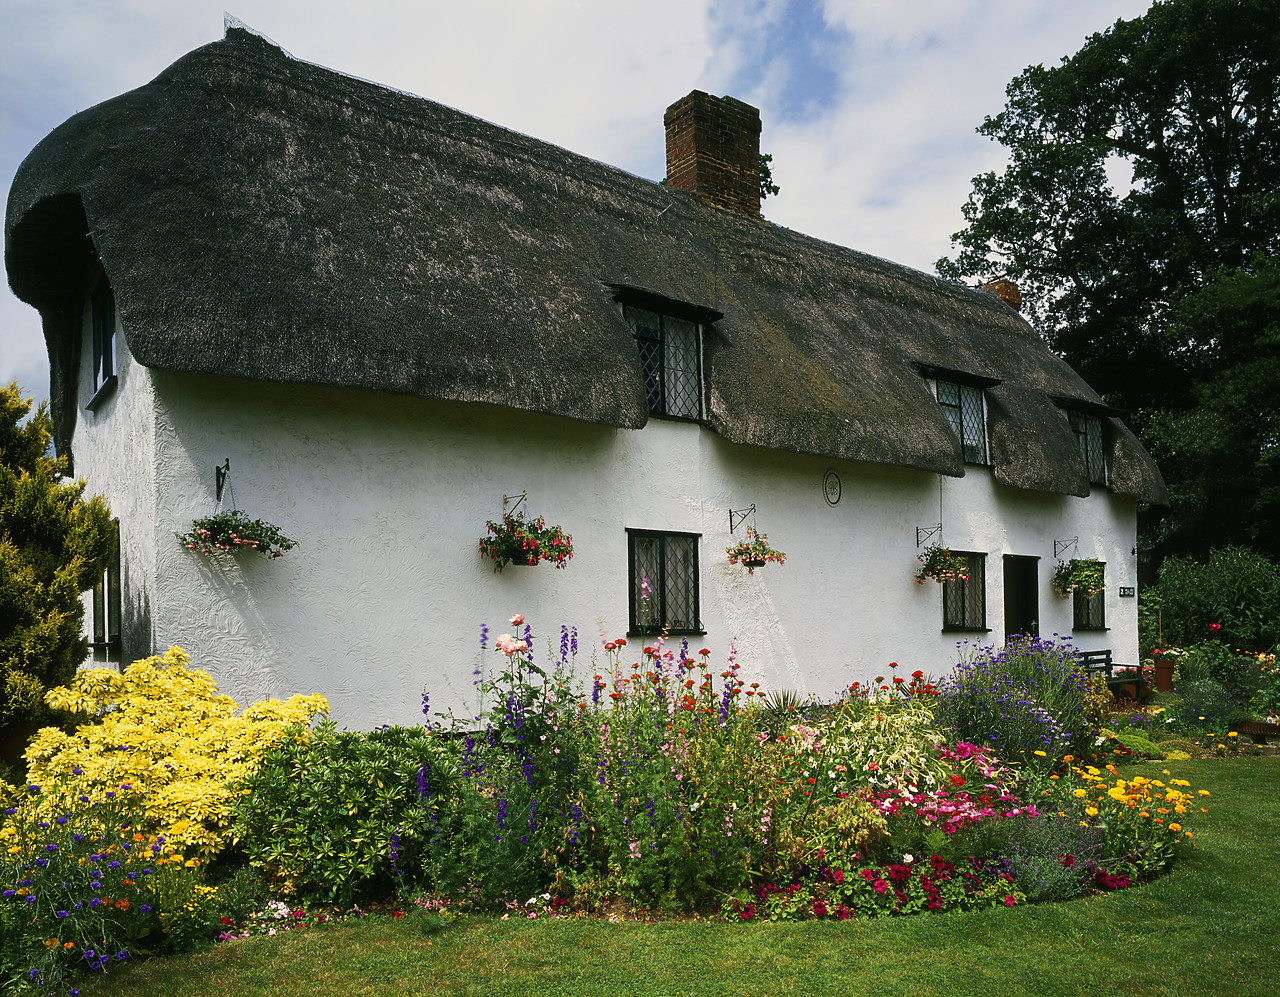 #040154-1 - Thatched Cottage & Garden, Finchingfield, Essex, England